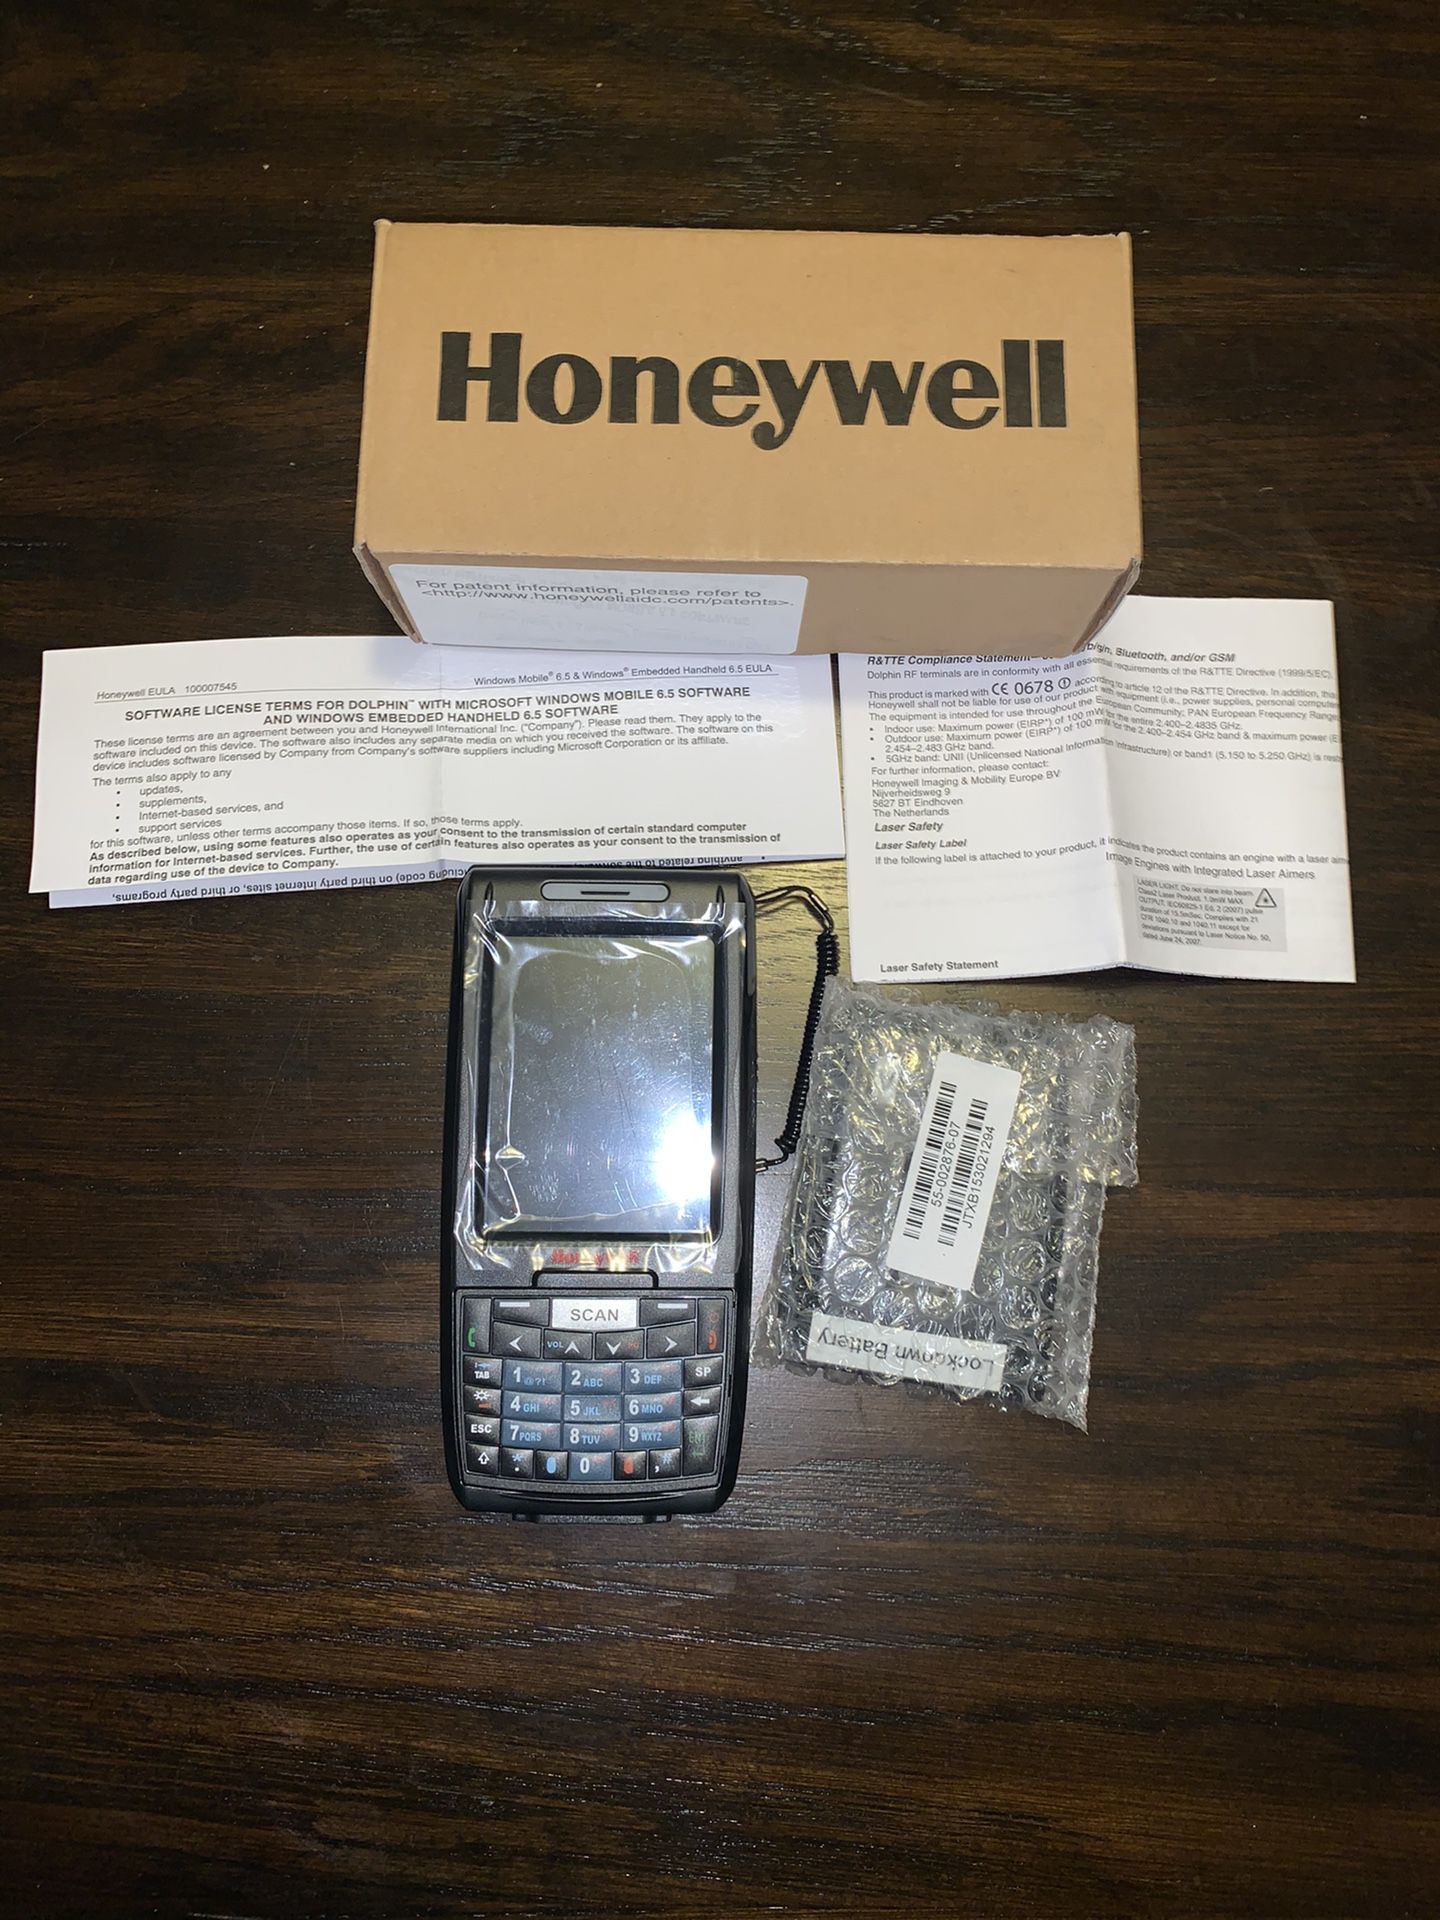 Honeywell Windows embedded 6.5 handheld software